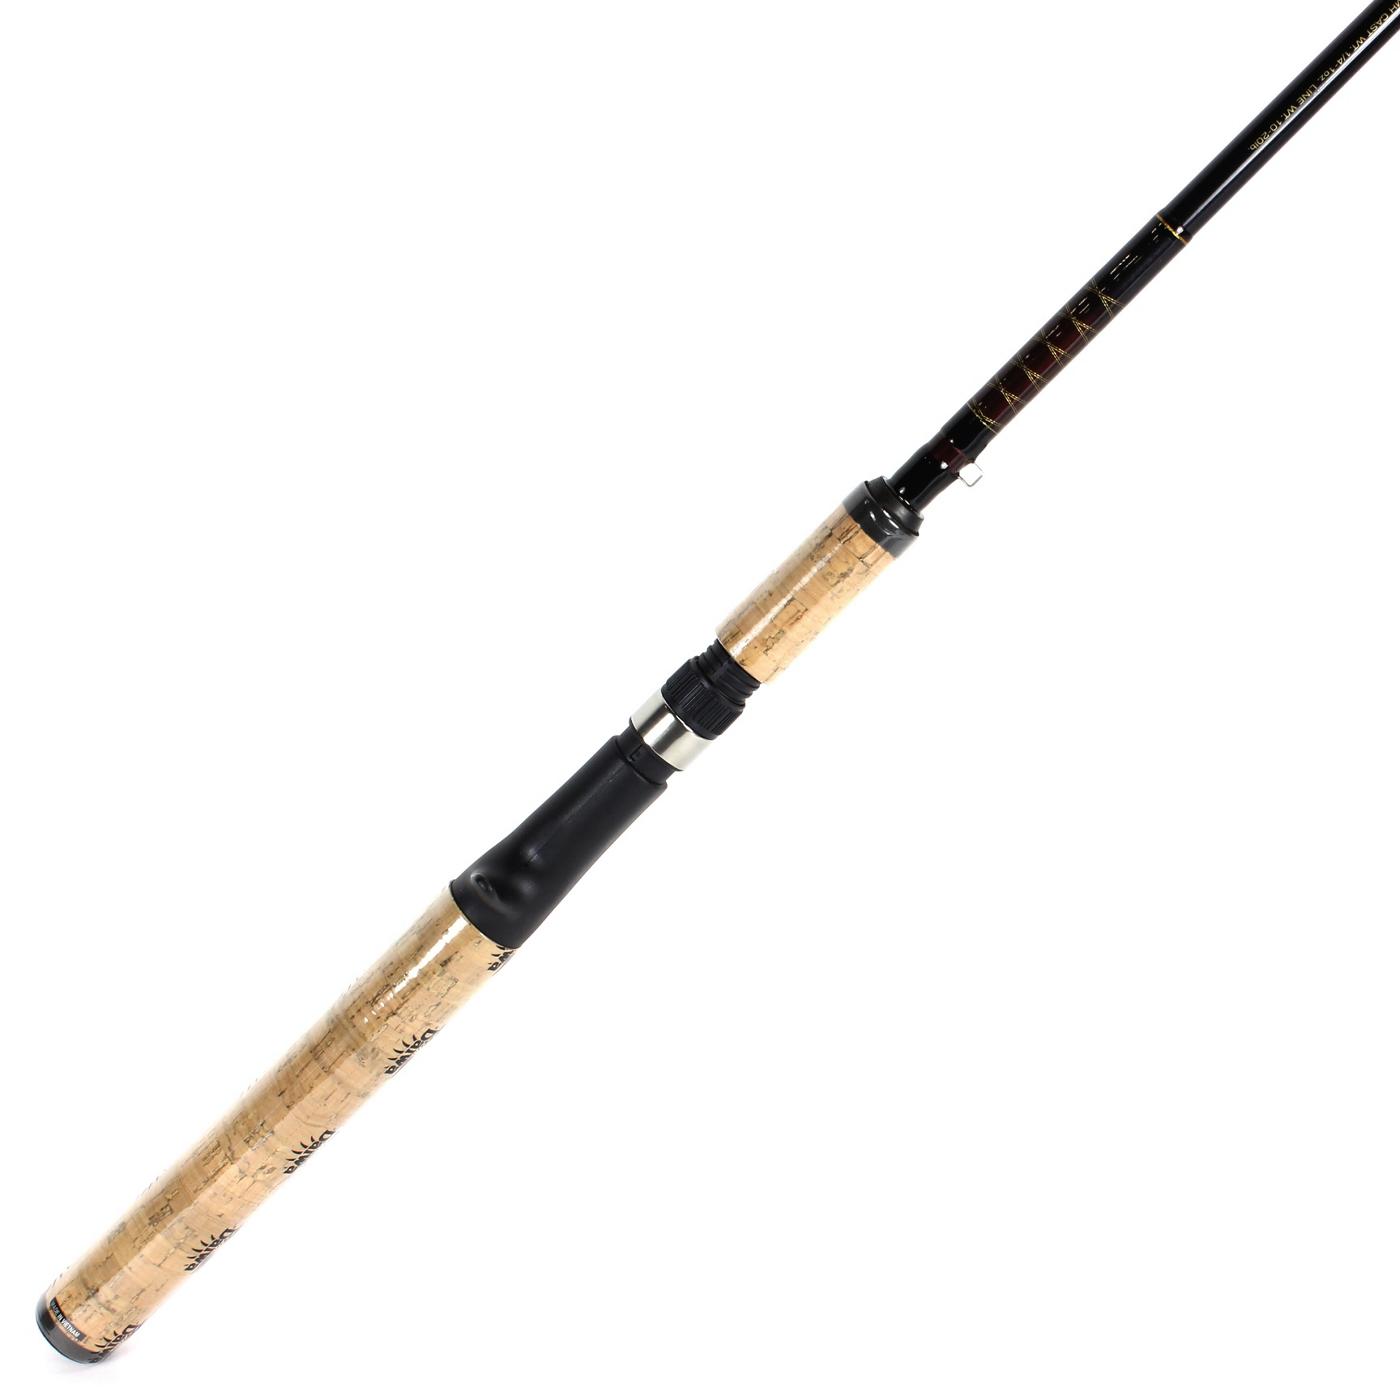 Daiwa 6' 6 Sweepfire Pop Casting Rod - Shop Fishing at H-E-B